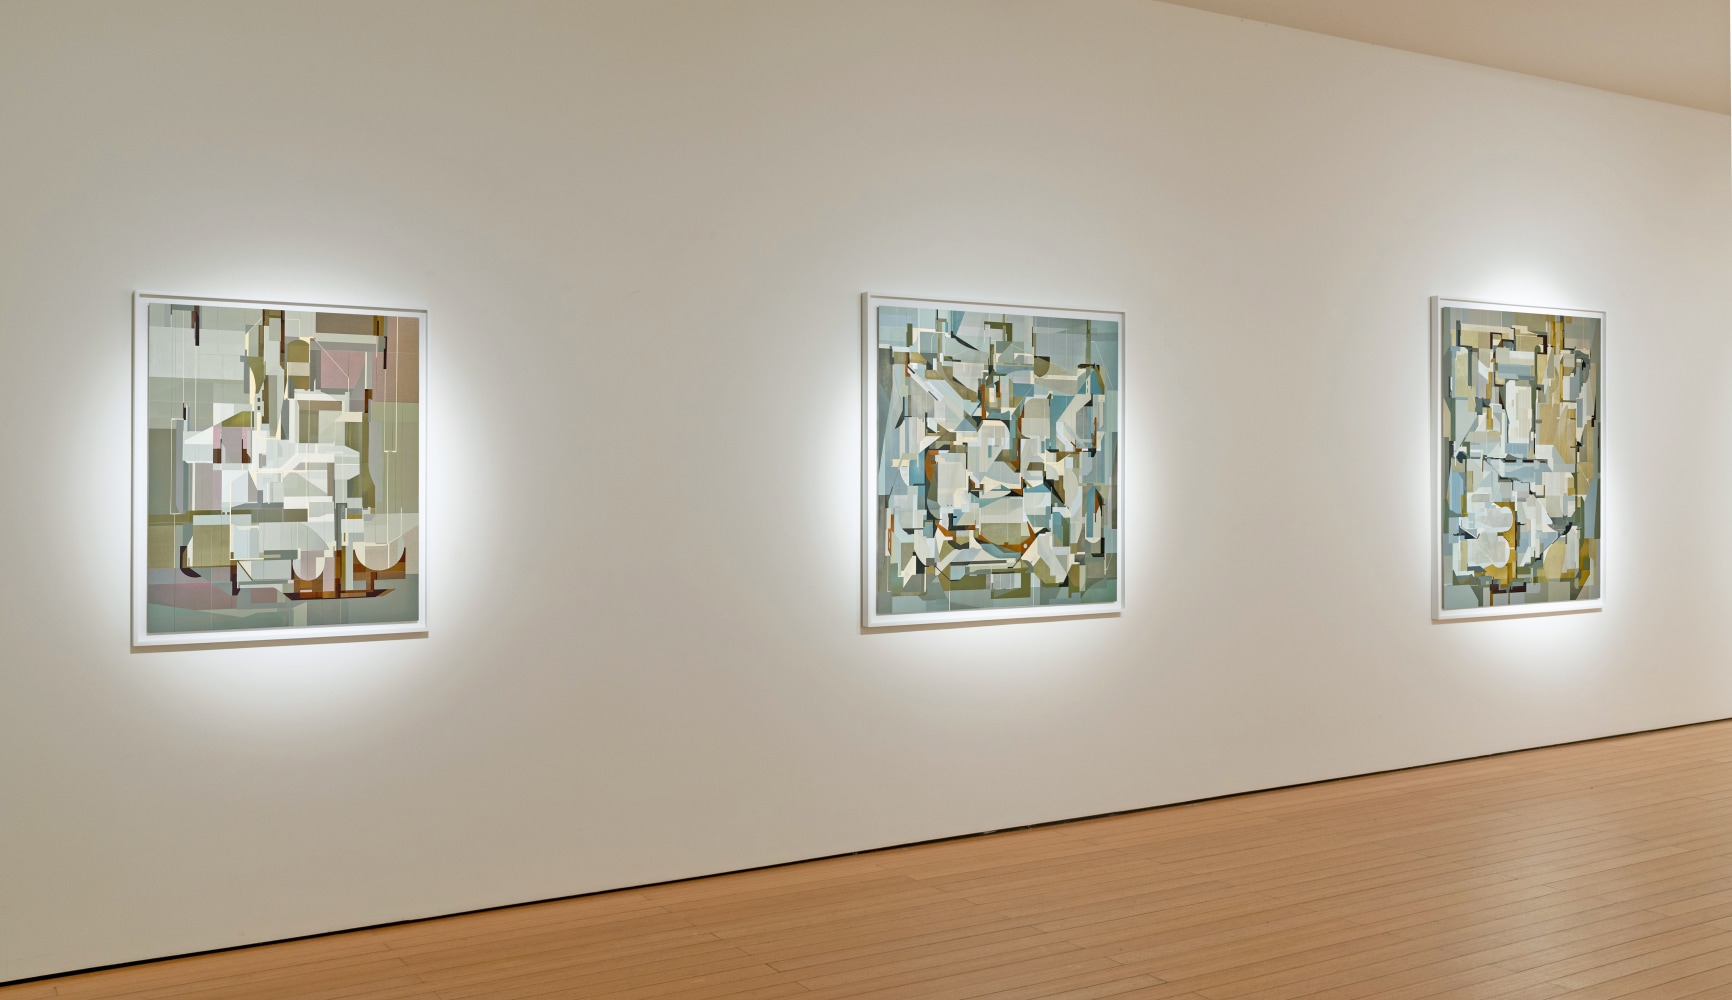 James Kennedy
Callan Contemporary
Gallery View, 2023